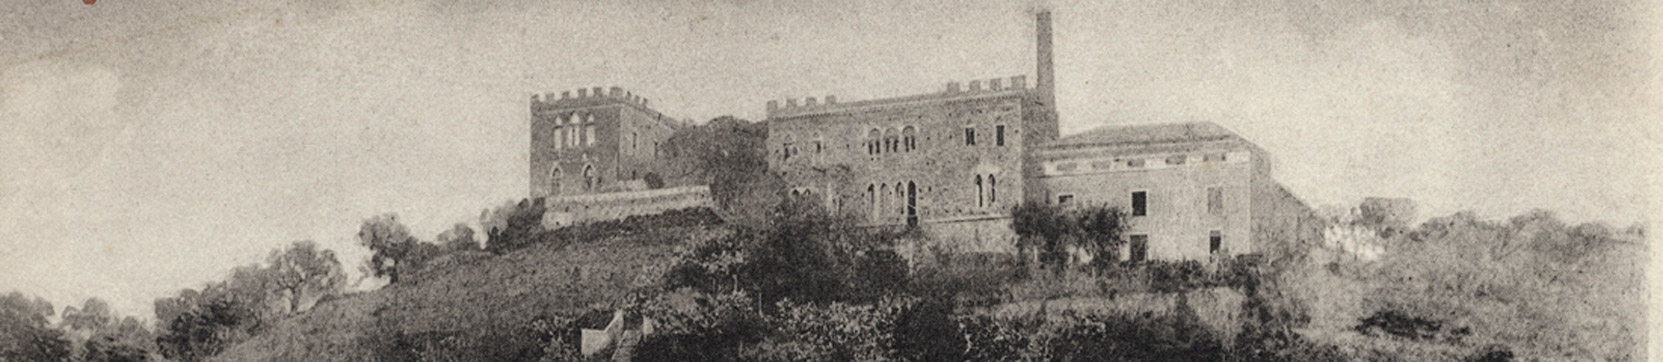 Iglesias, il castello [1663x362]